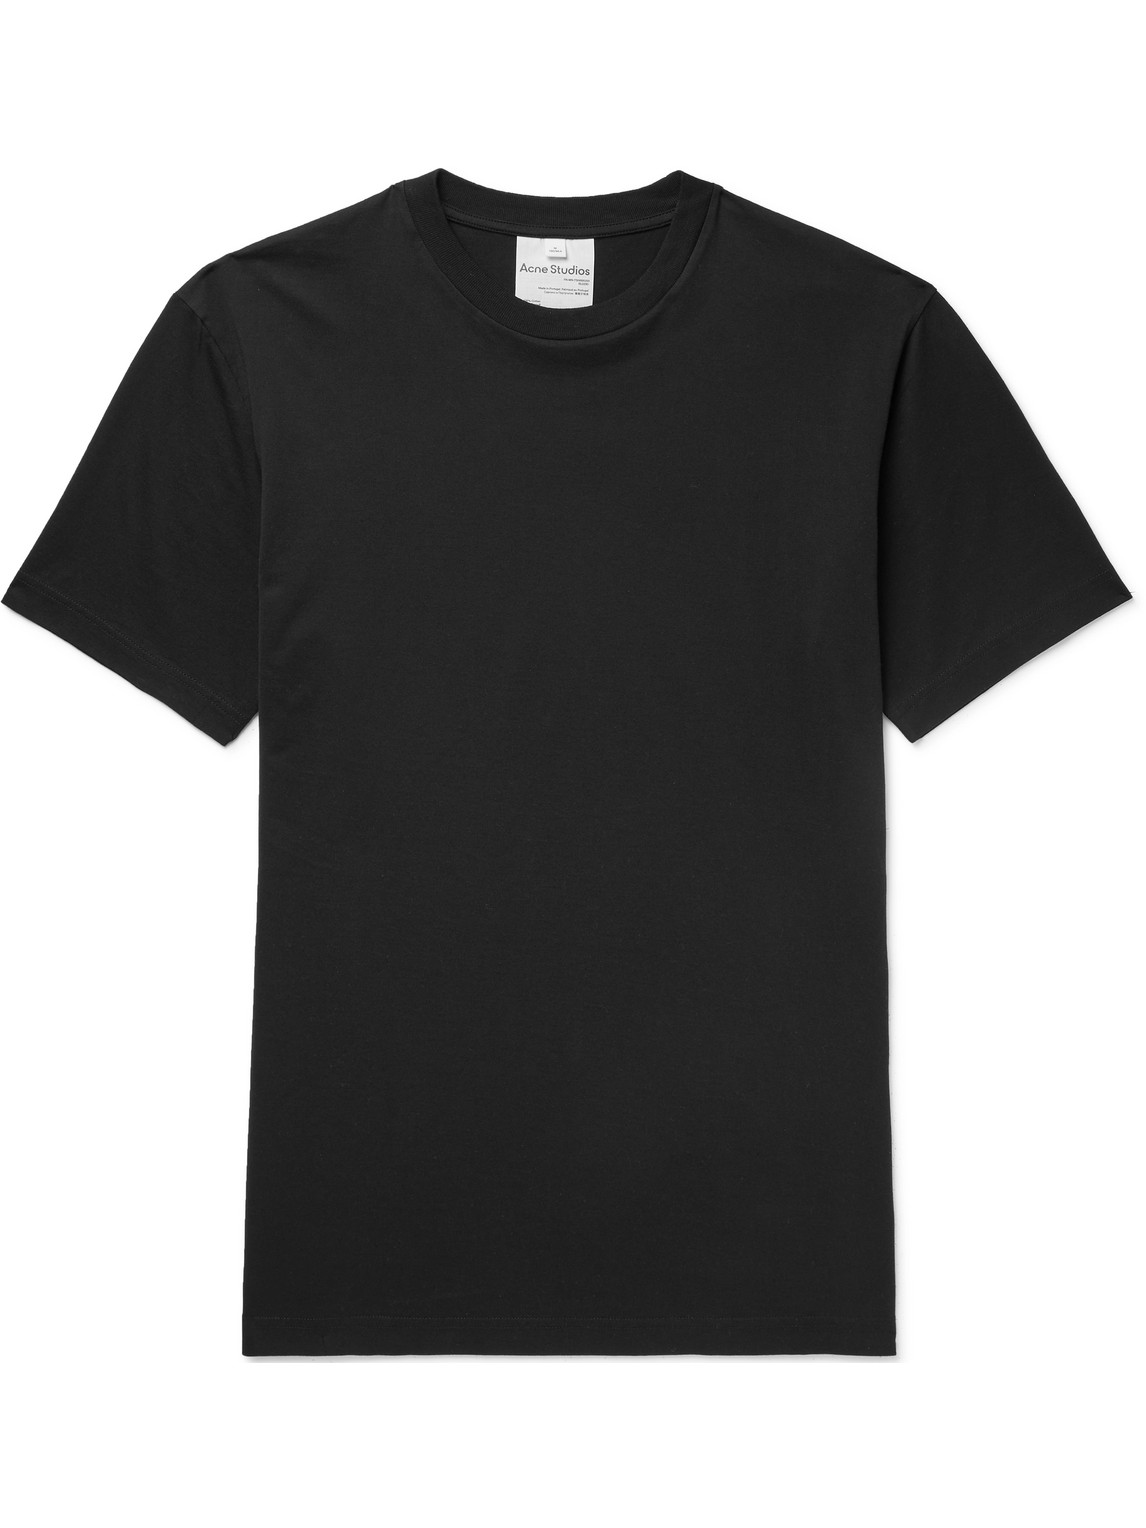 Everrick Slim-Fit Cotton-Jersey T-Shirt